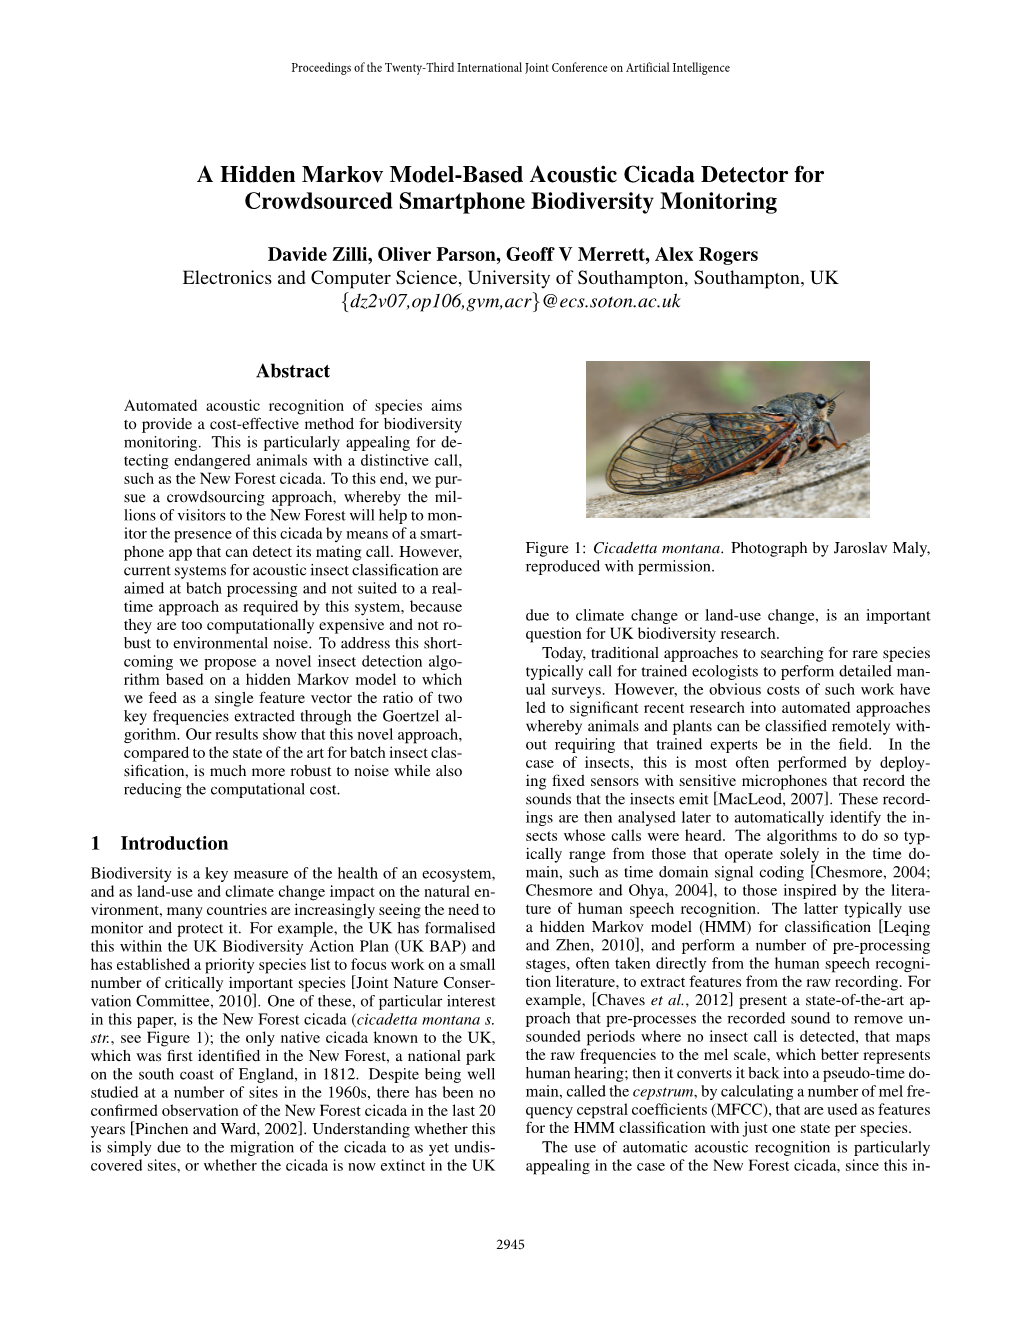 A Hidden Markov Model-Based Acoustic Cicada Detector for Crowdsourced Smartphone Biodiversity Monitoring